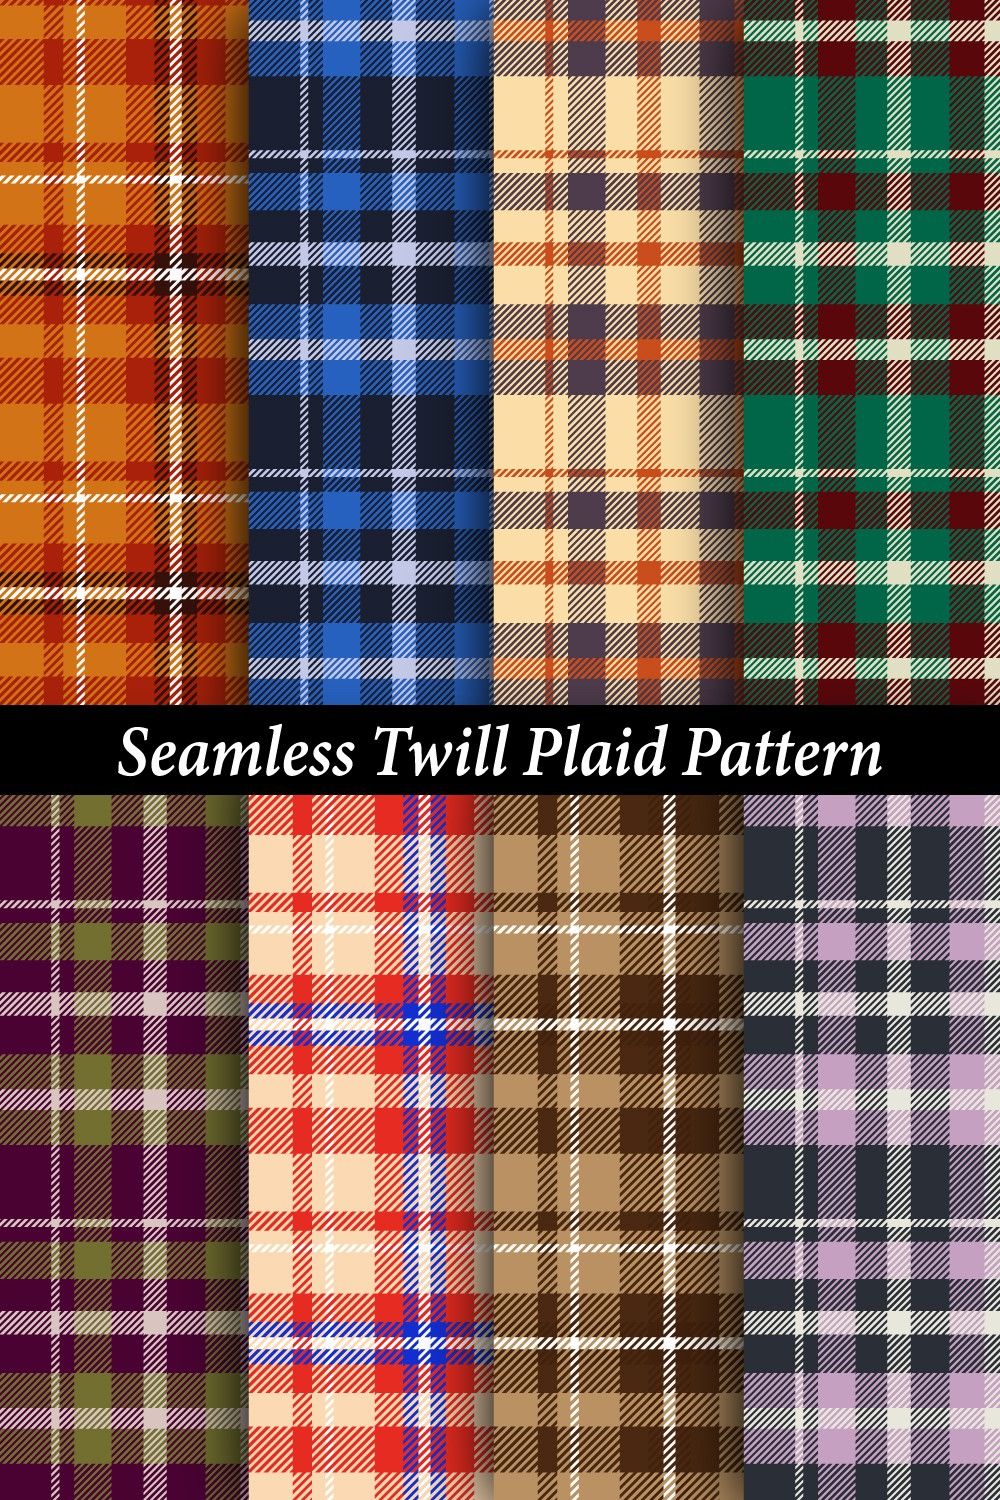 seamless twill plaid pattern, bundle of 8 pattern pinterest preview image.